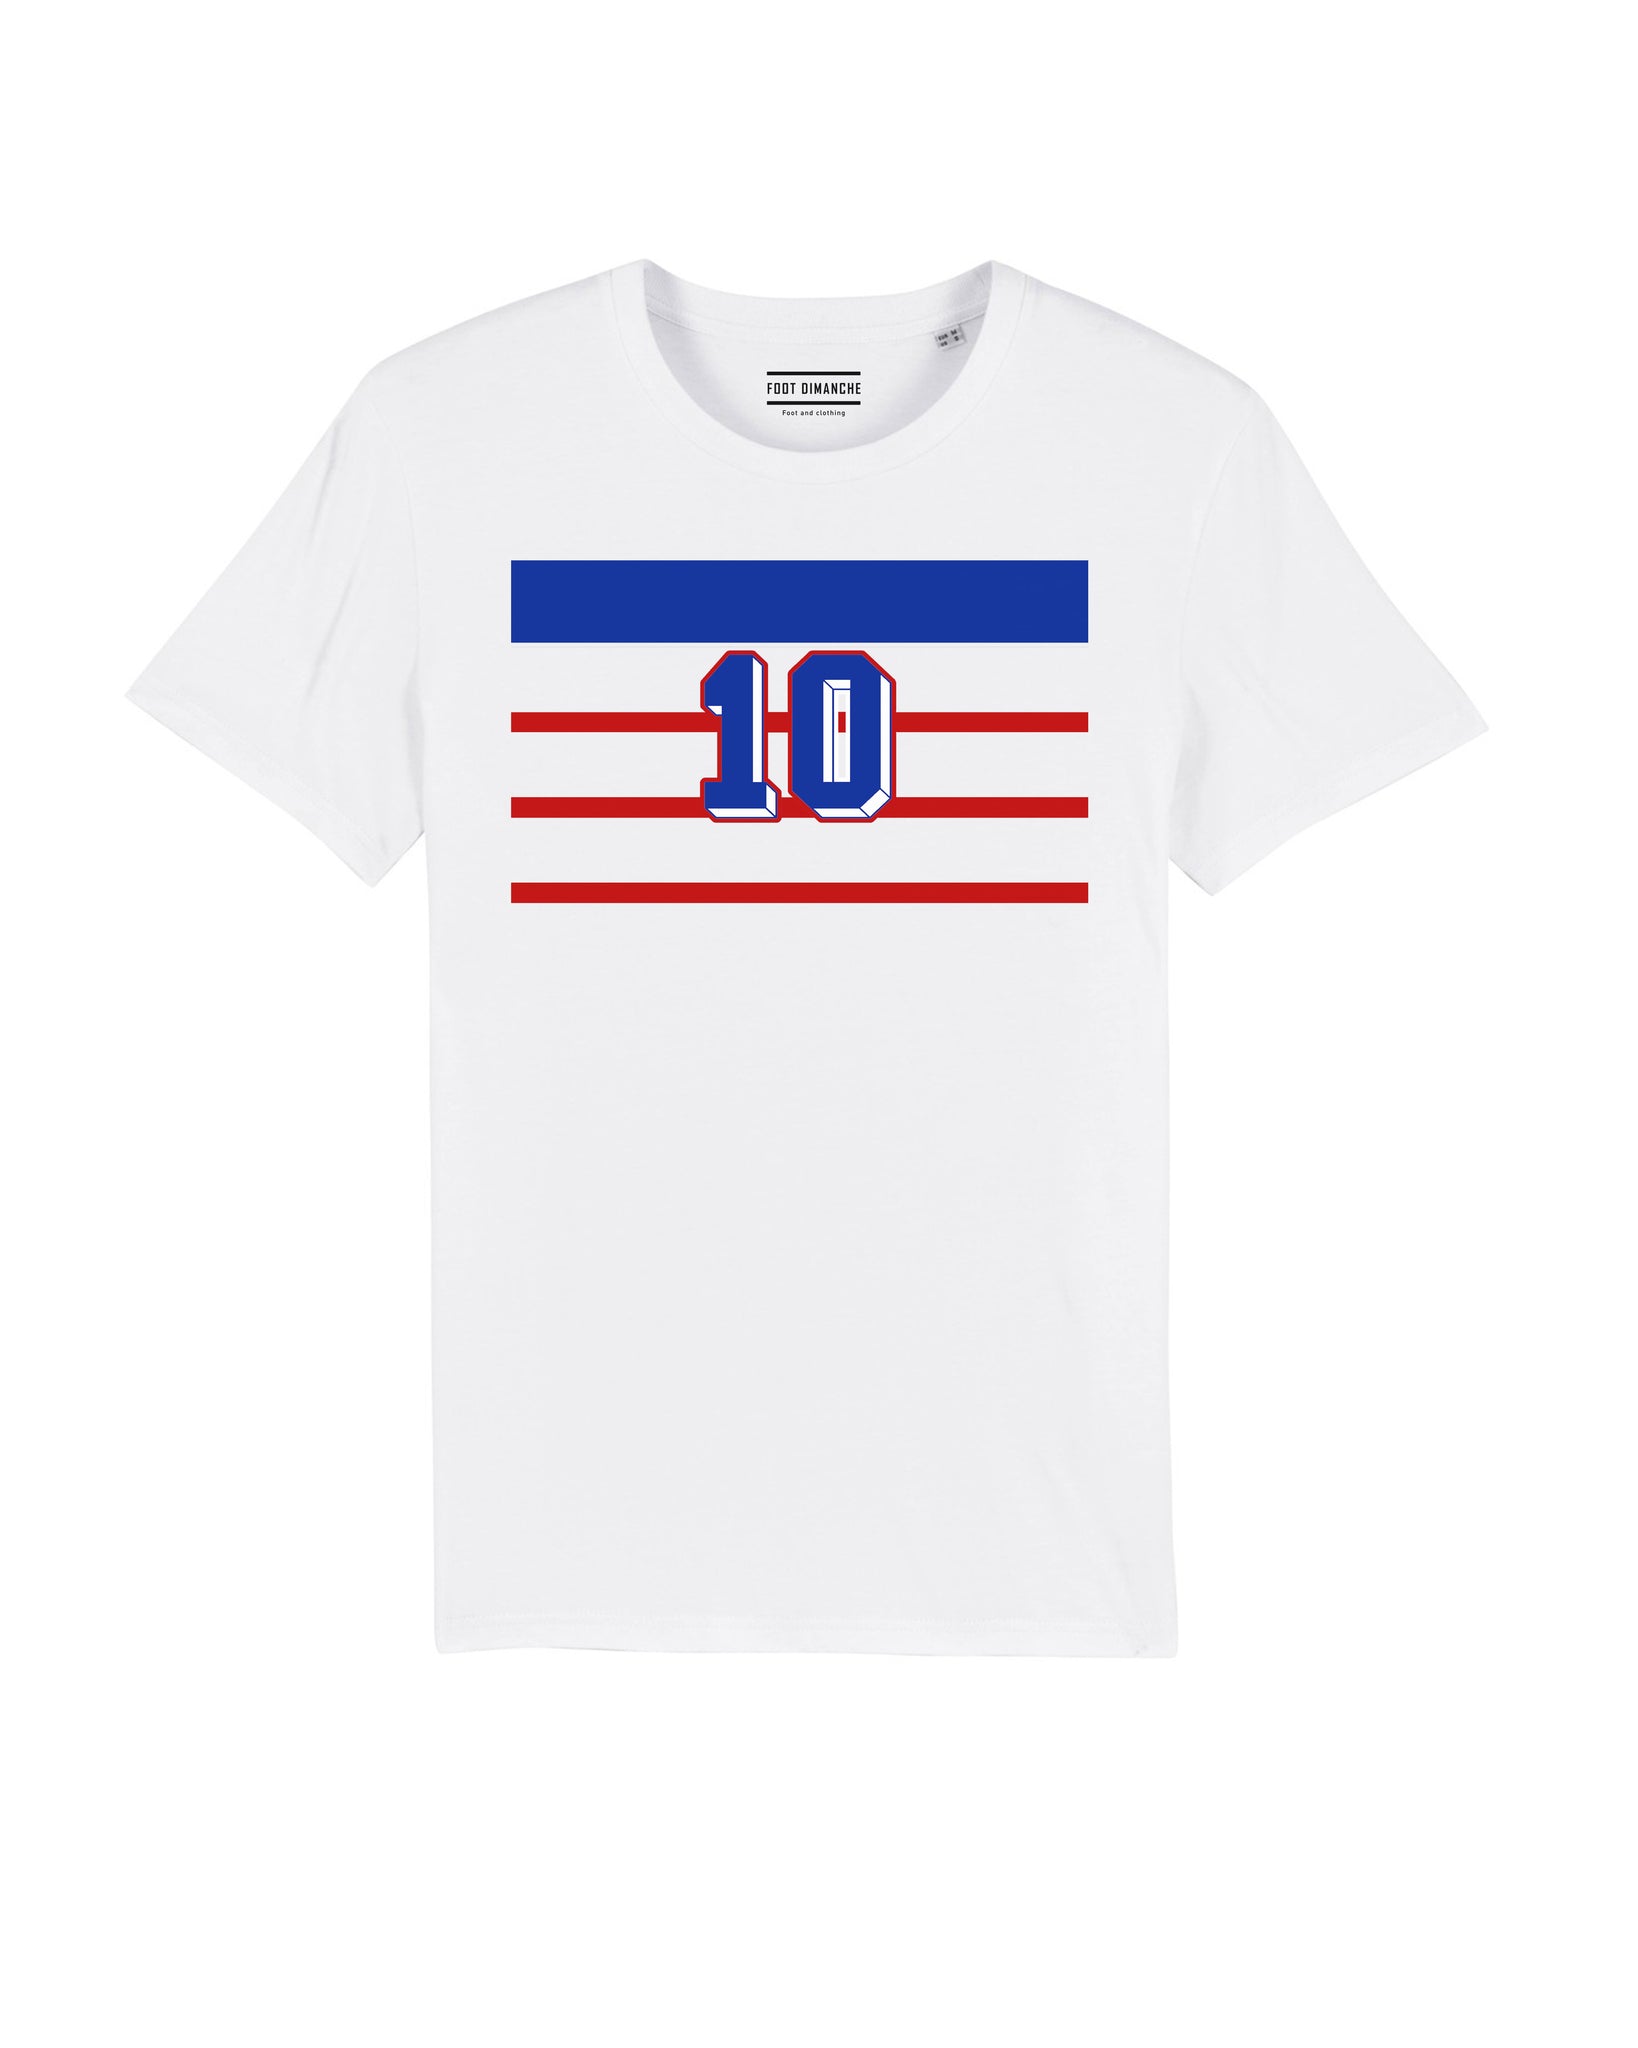 Tee Shirt France 98